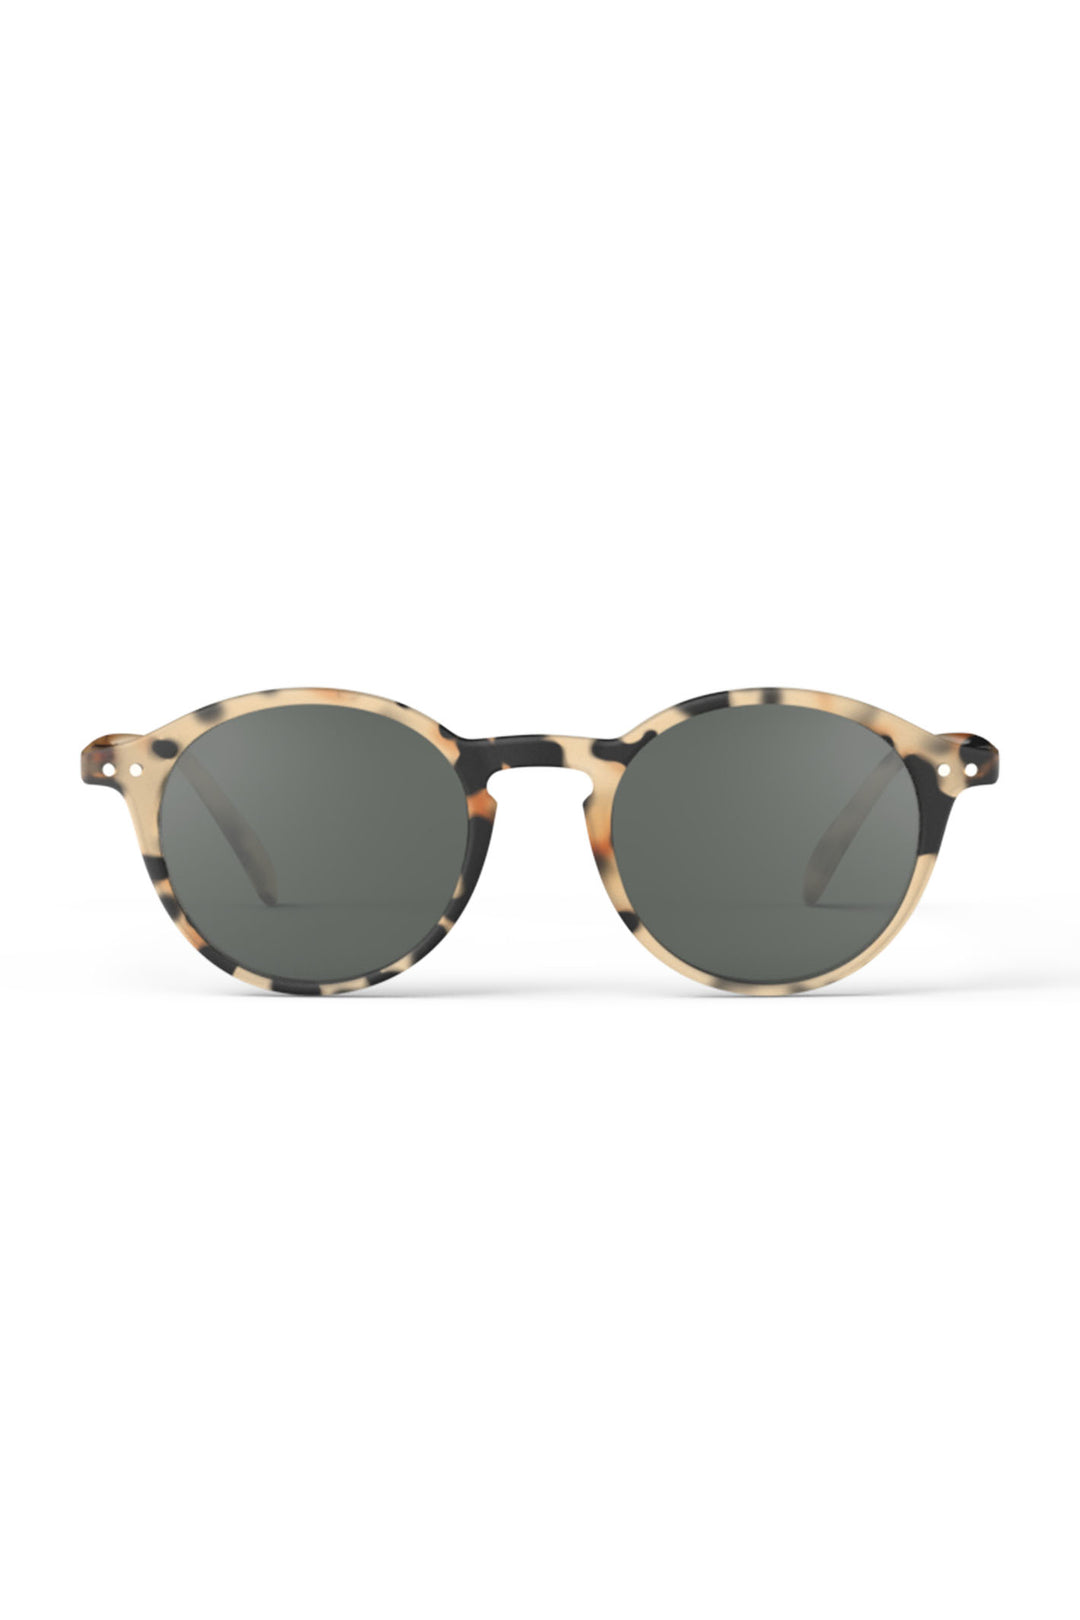 Izipizi Paris SLMSDC69 Light Brown Tortoise Pattern Sunglasses - Olivia Grace Fashion